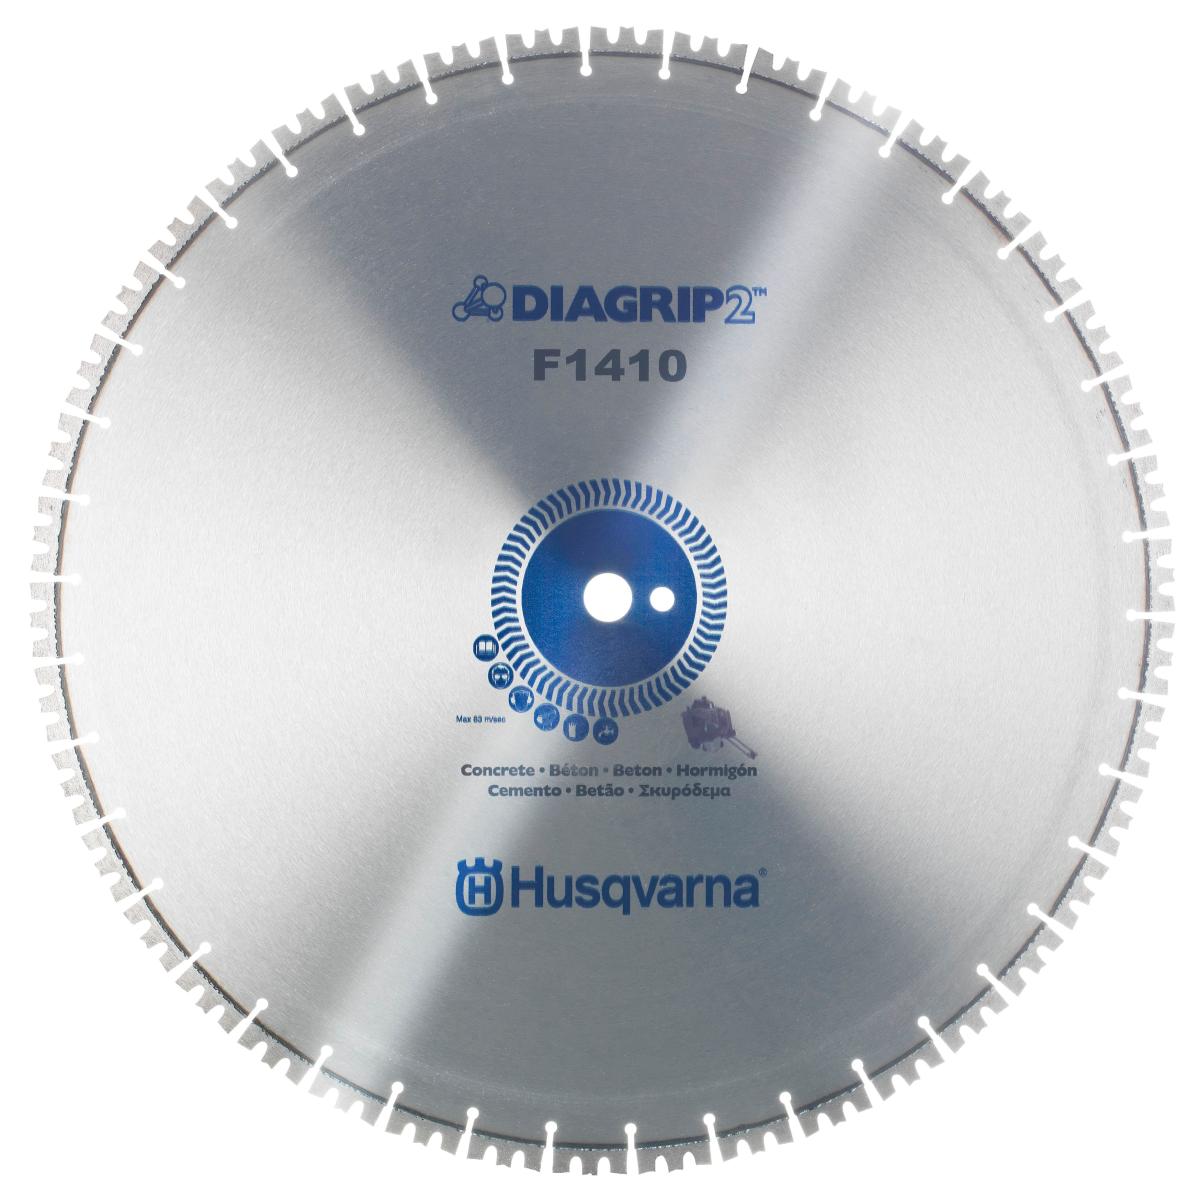 Husqvarna F1410 | Cured Concrete Diamond Blade